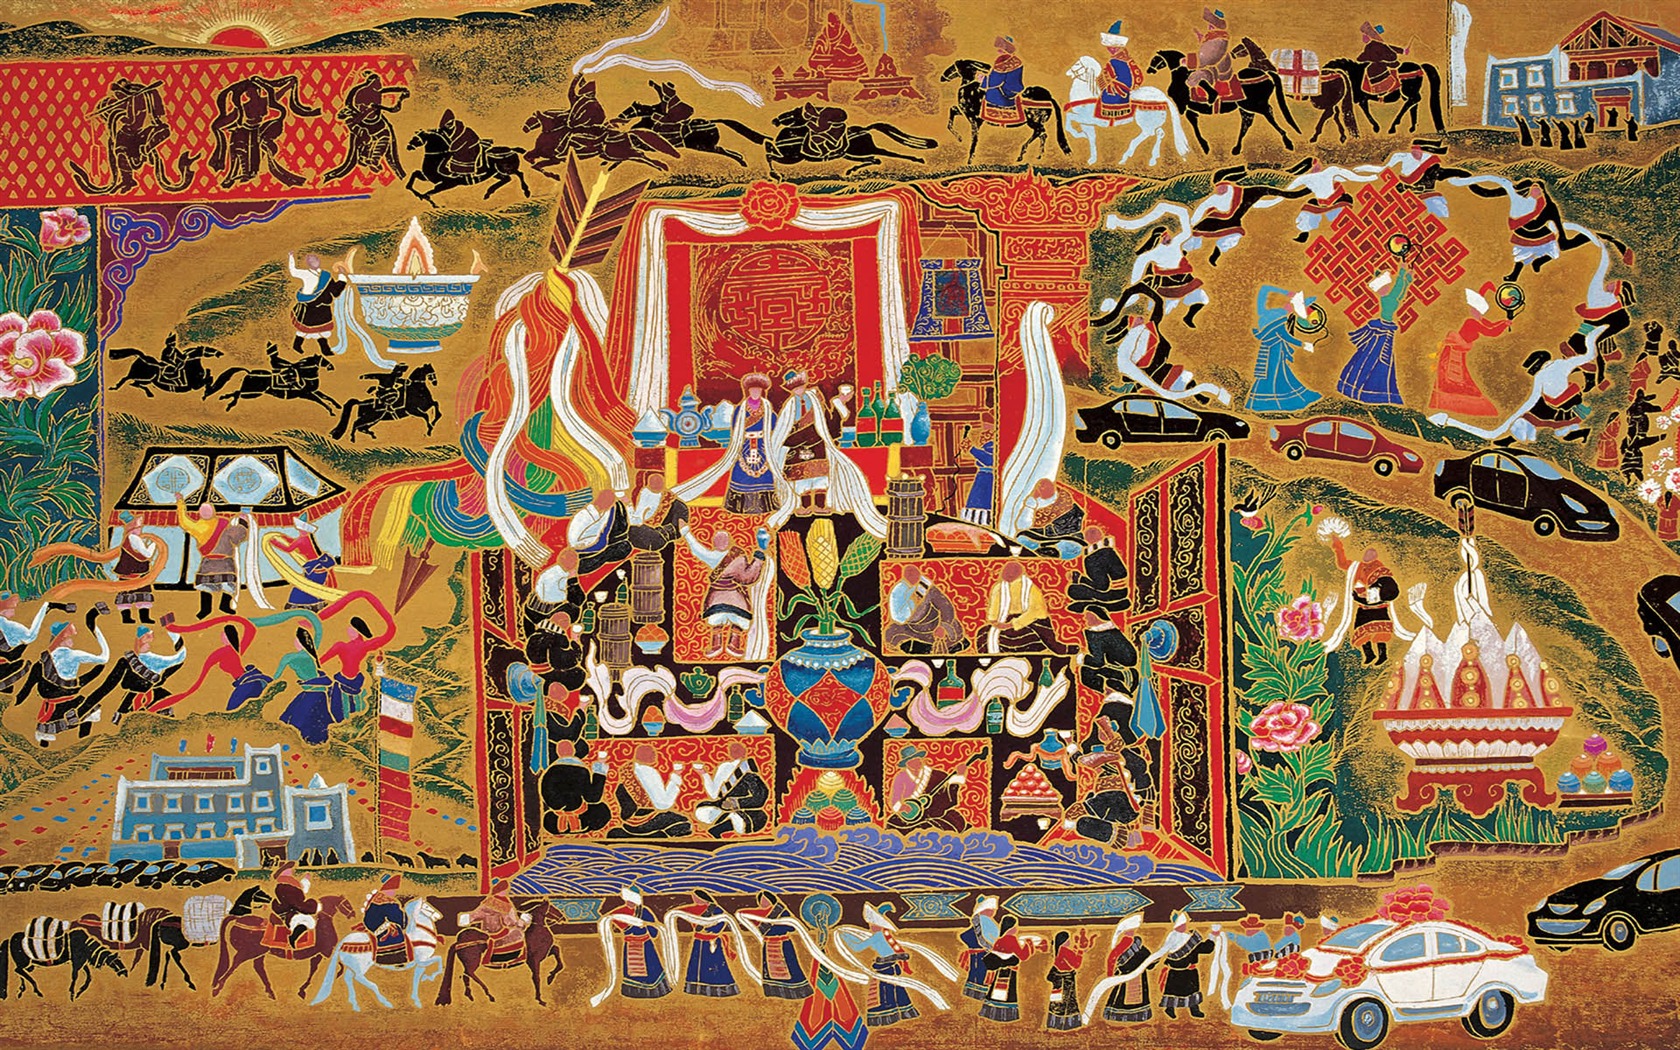 Cheung Pakistan fond d'écran d'impression du Tibet (2) #20 - 1680x1050